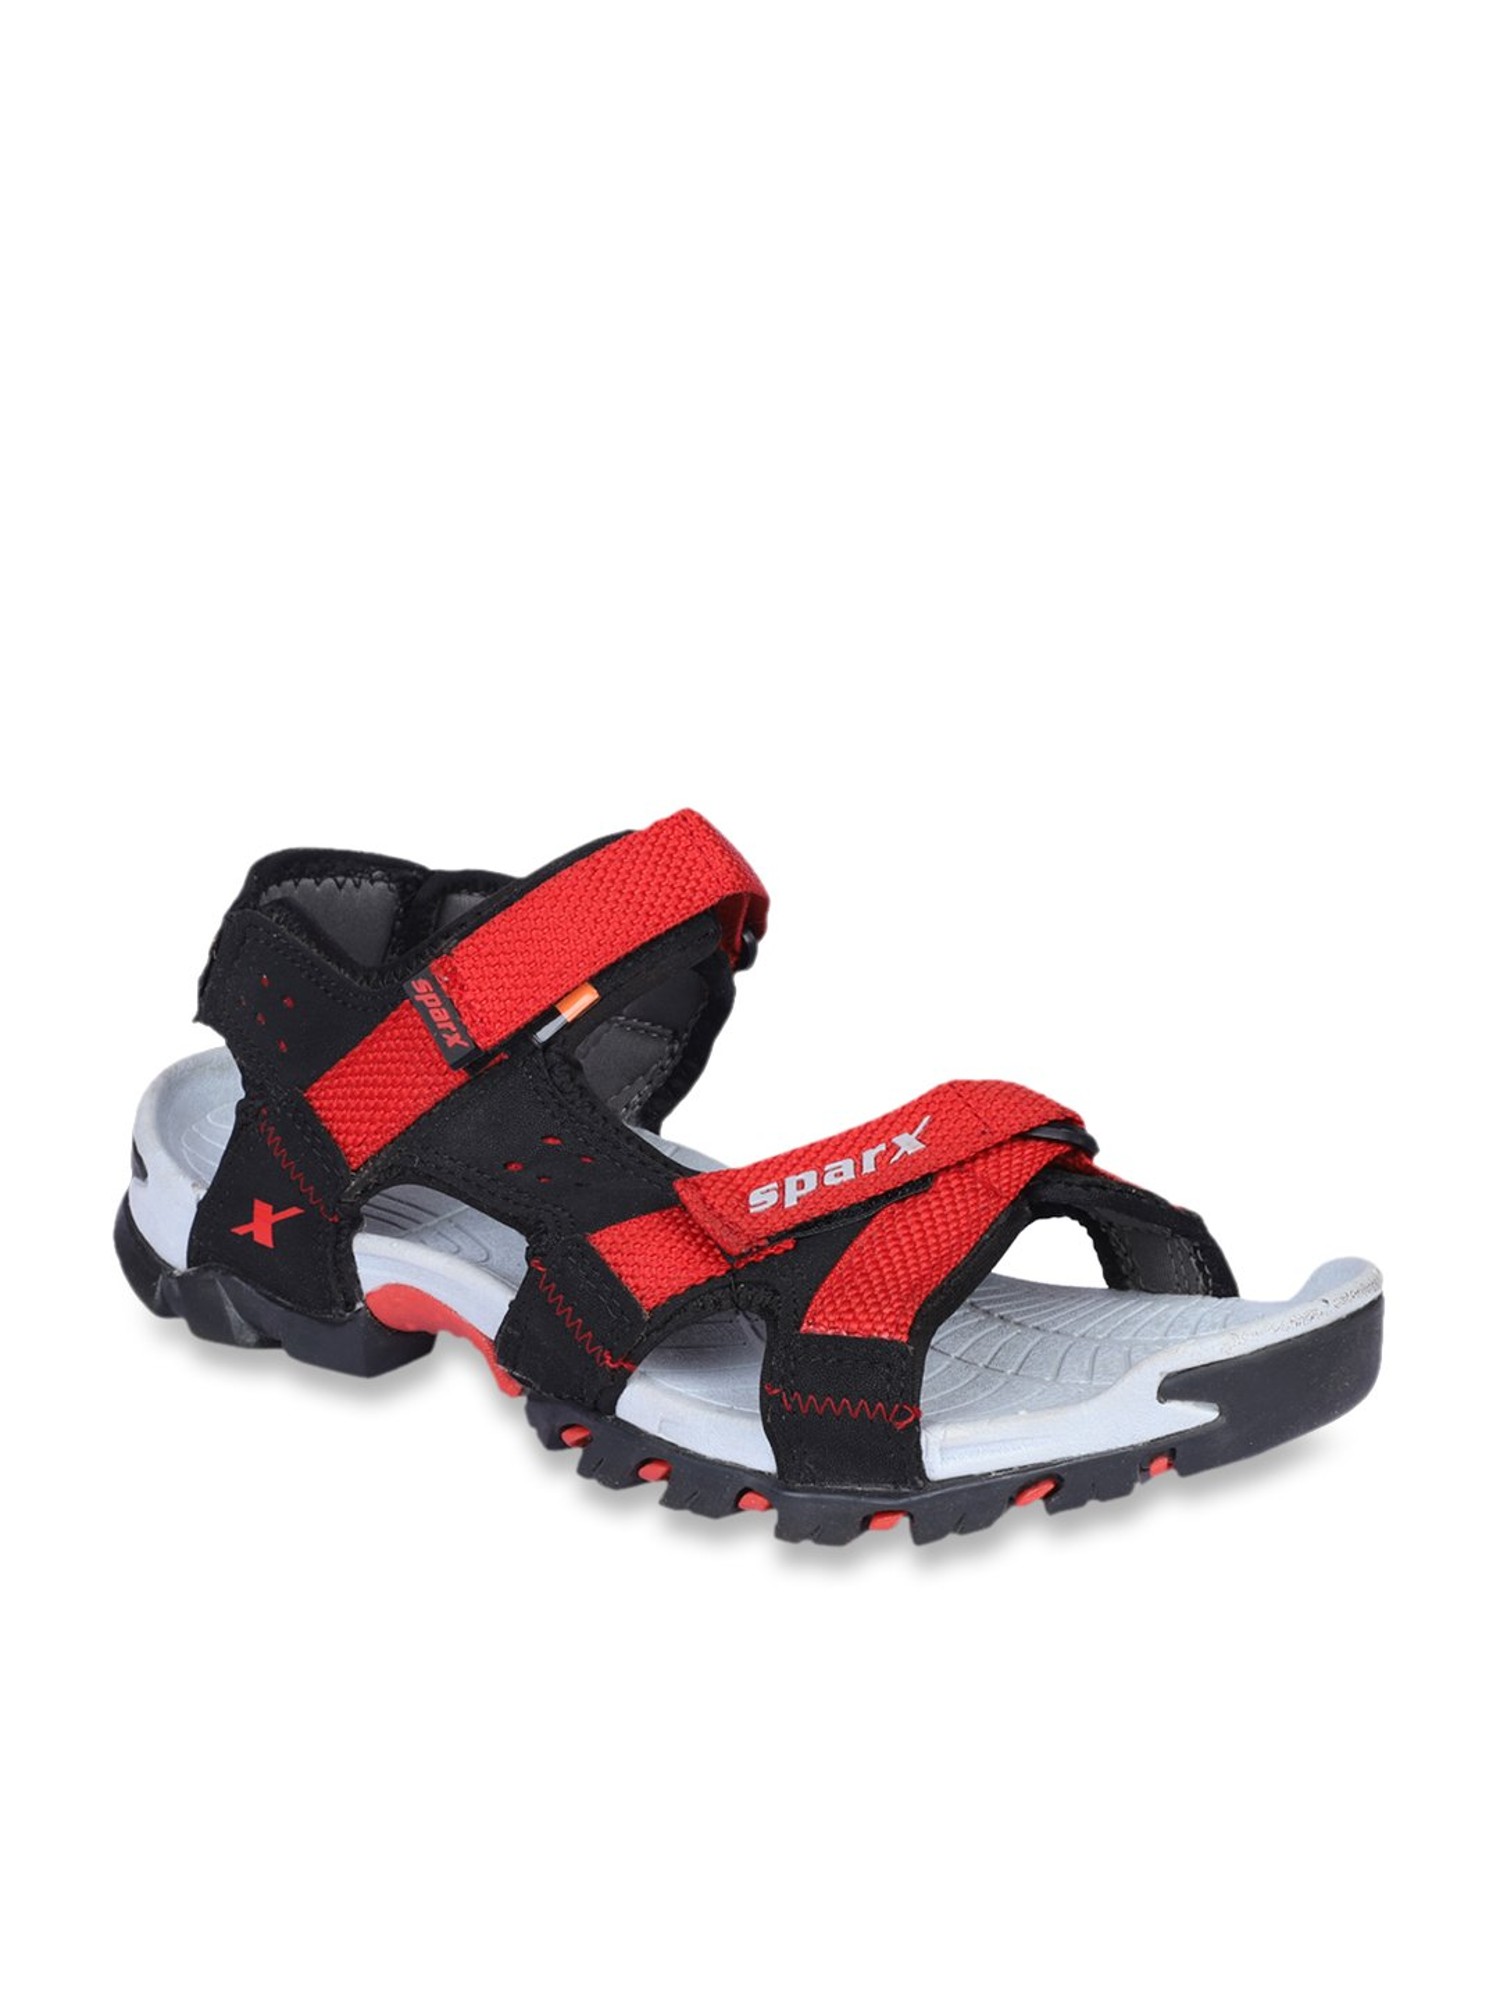 Sparx Men N. Blue Outdoor Sandals-7 UK (40 2/3 EU) (SS0487G_BLNB0007) :  Amazon.in: Shoes & Handbags